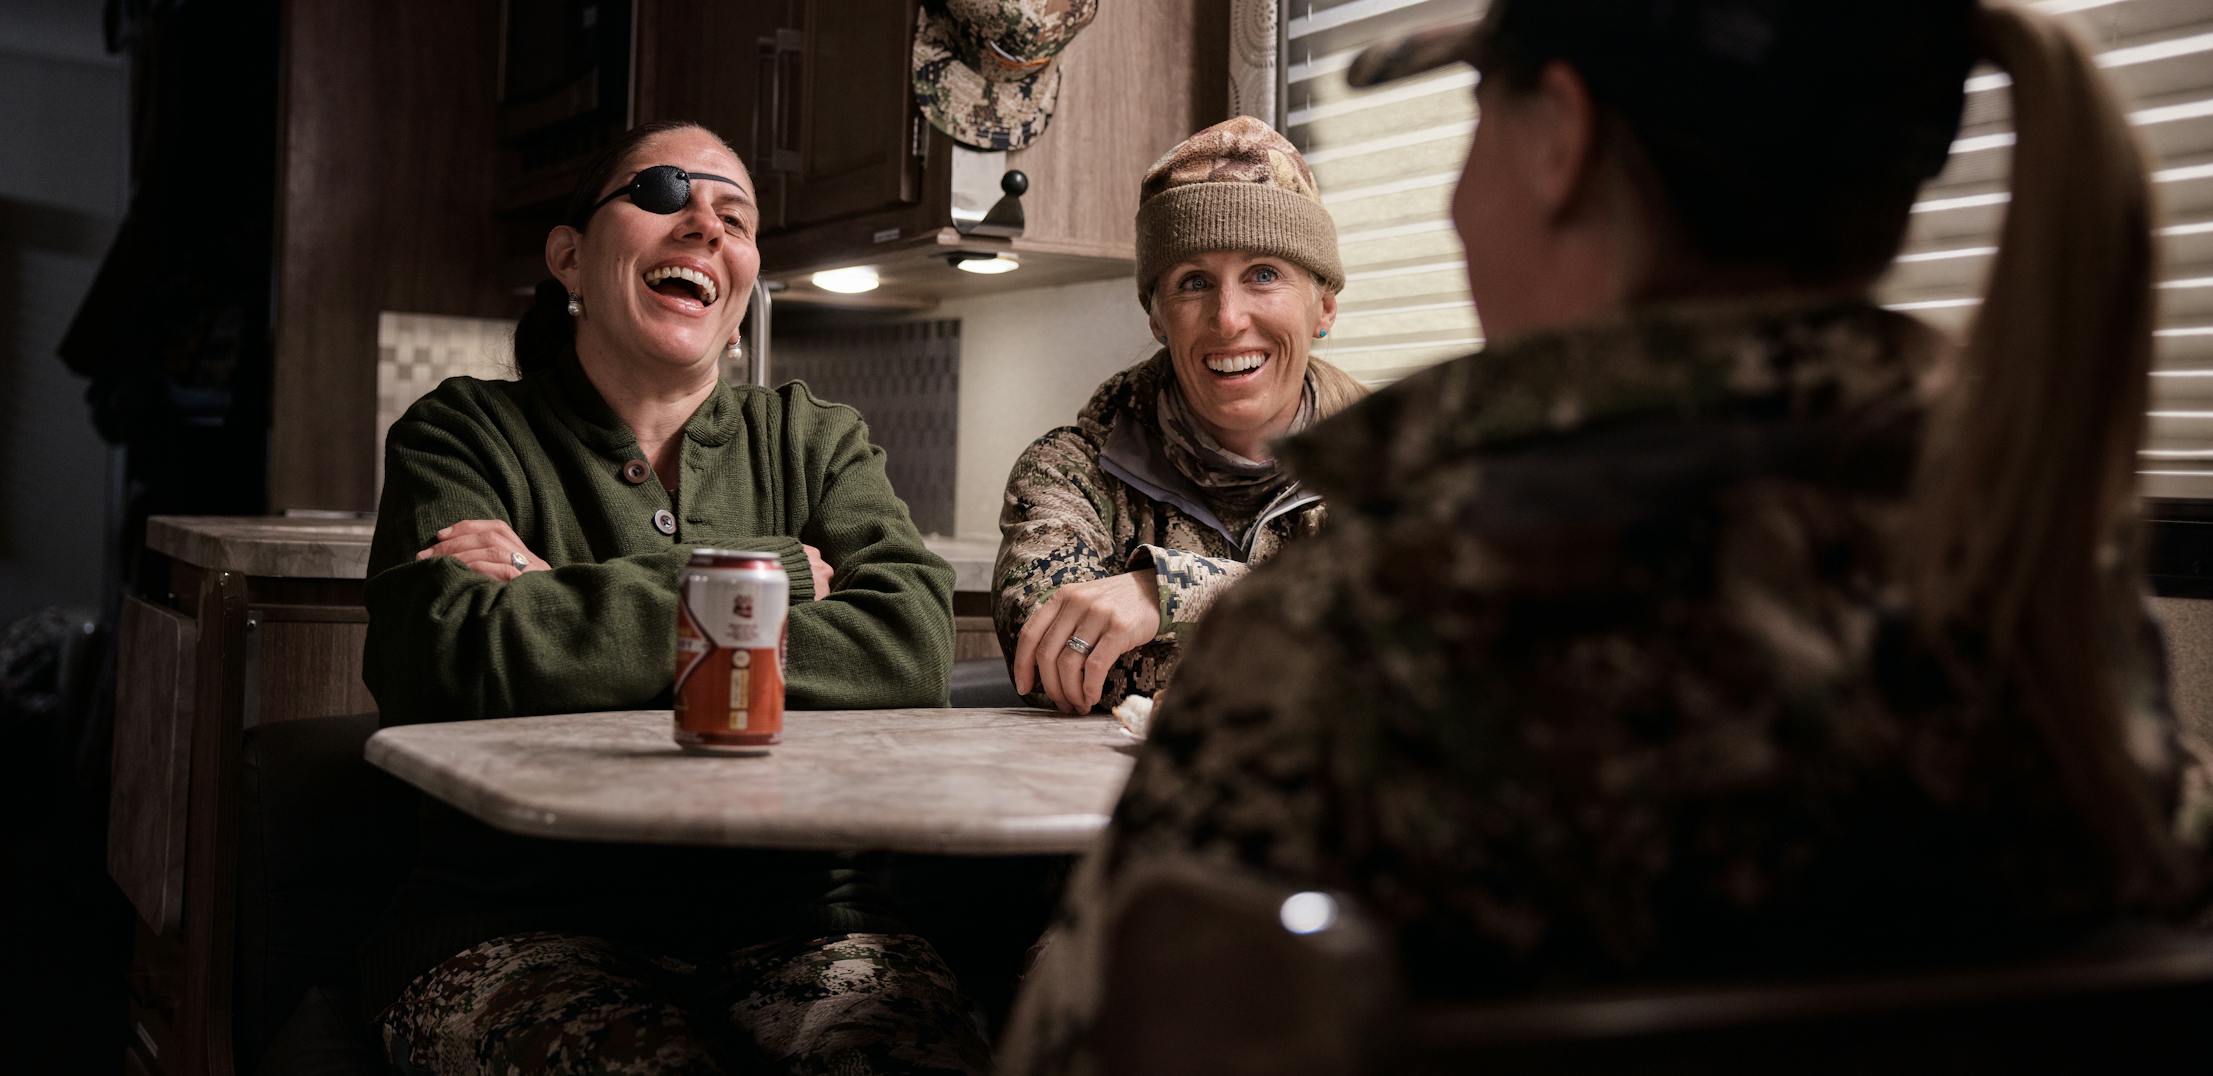 A group of veteran women chatting inside a class c RV after a hunt